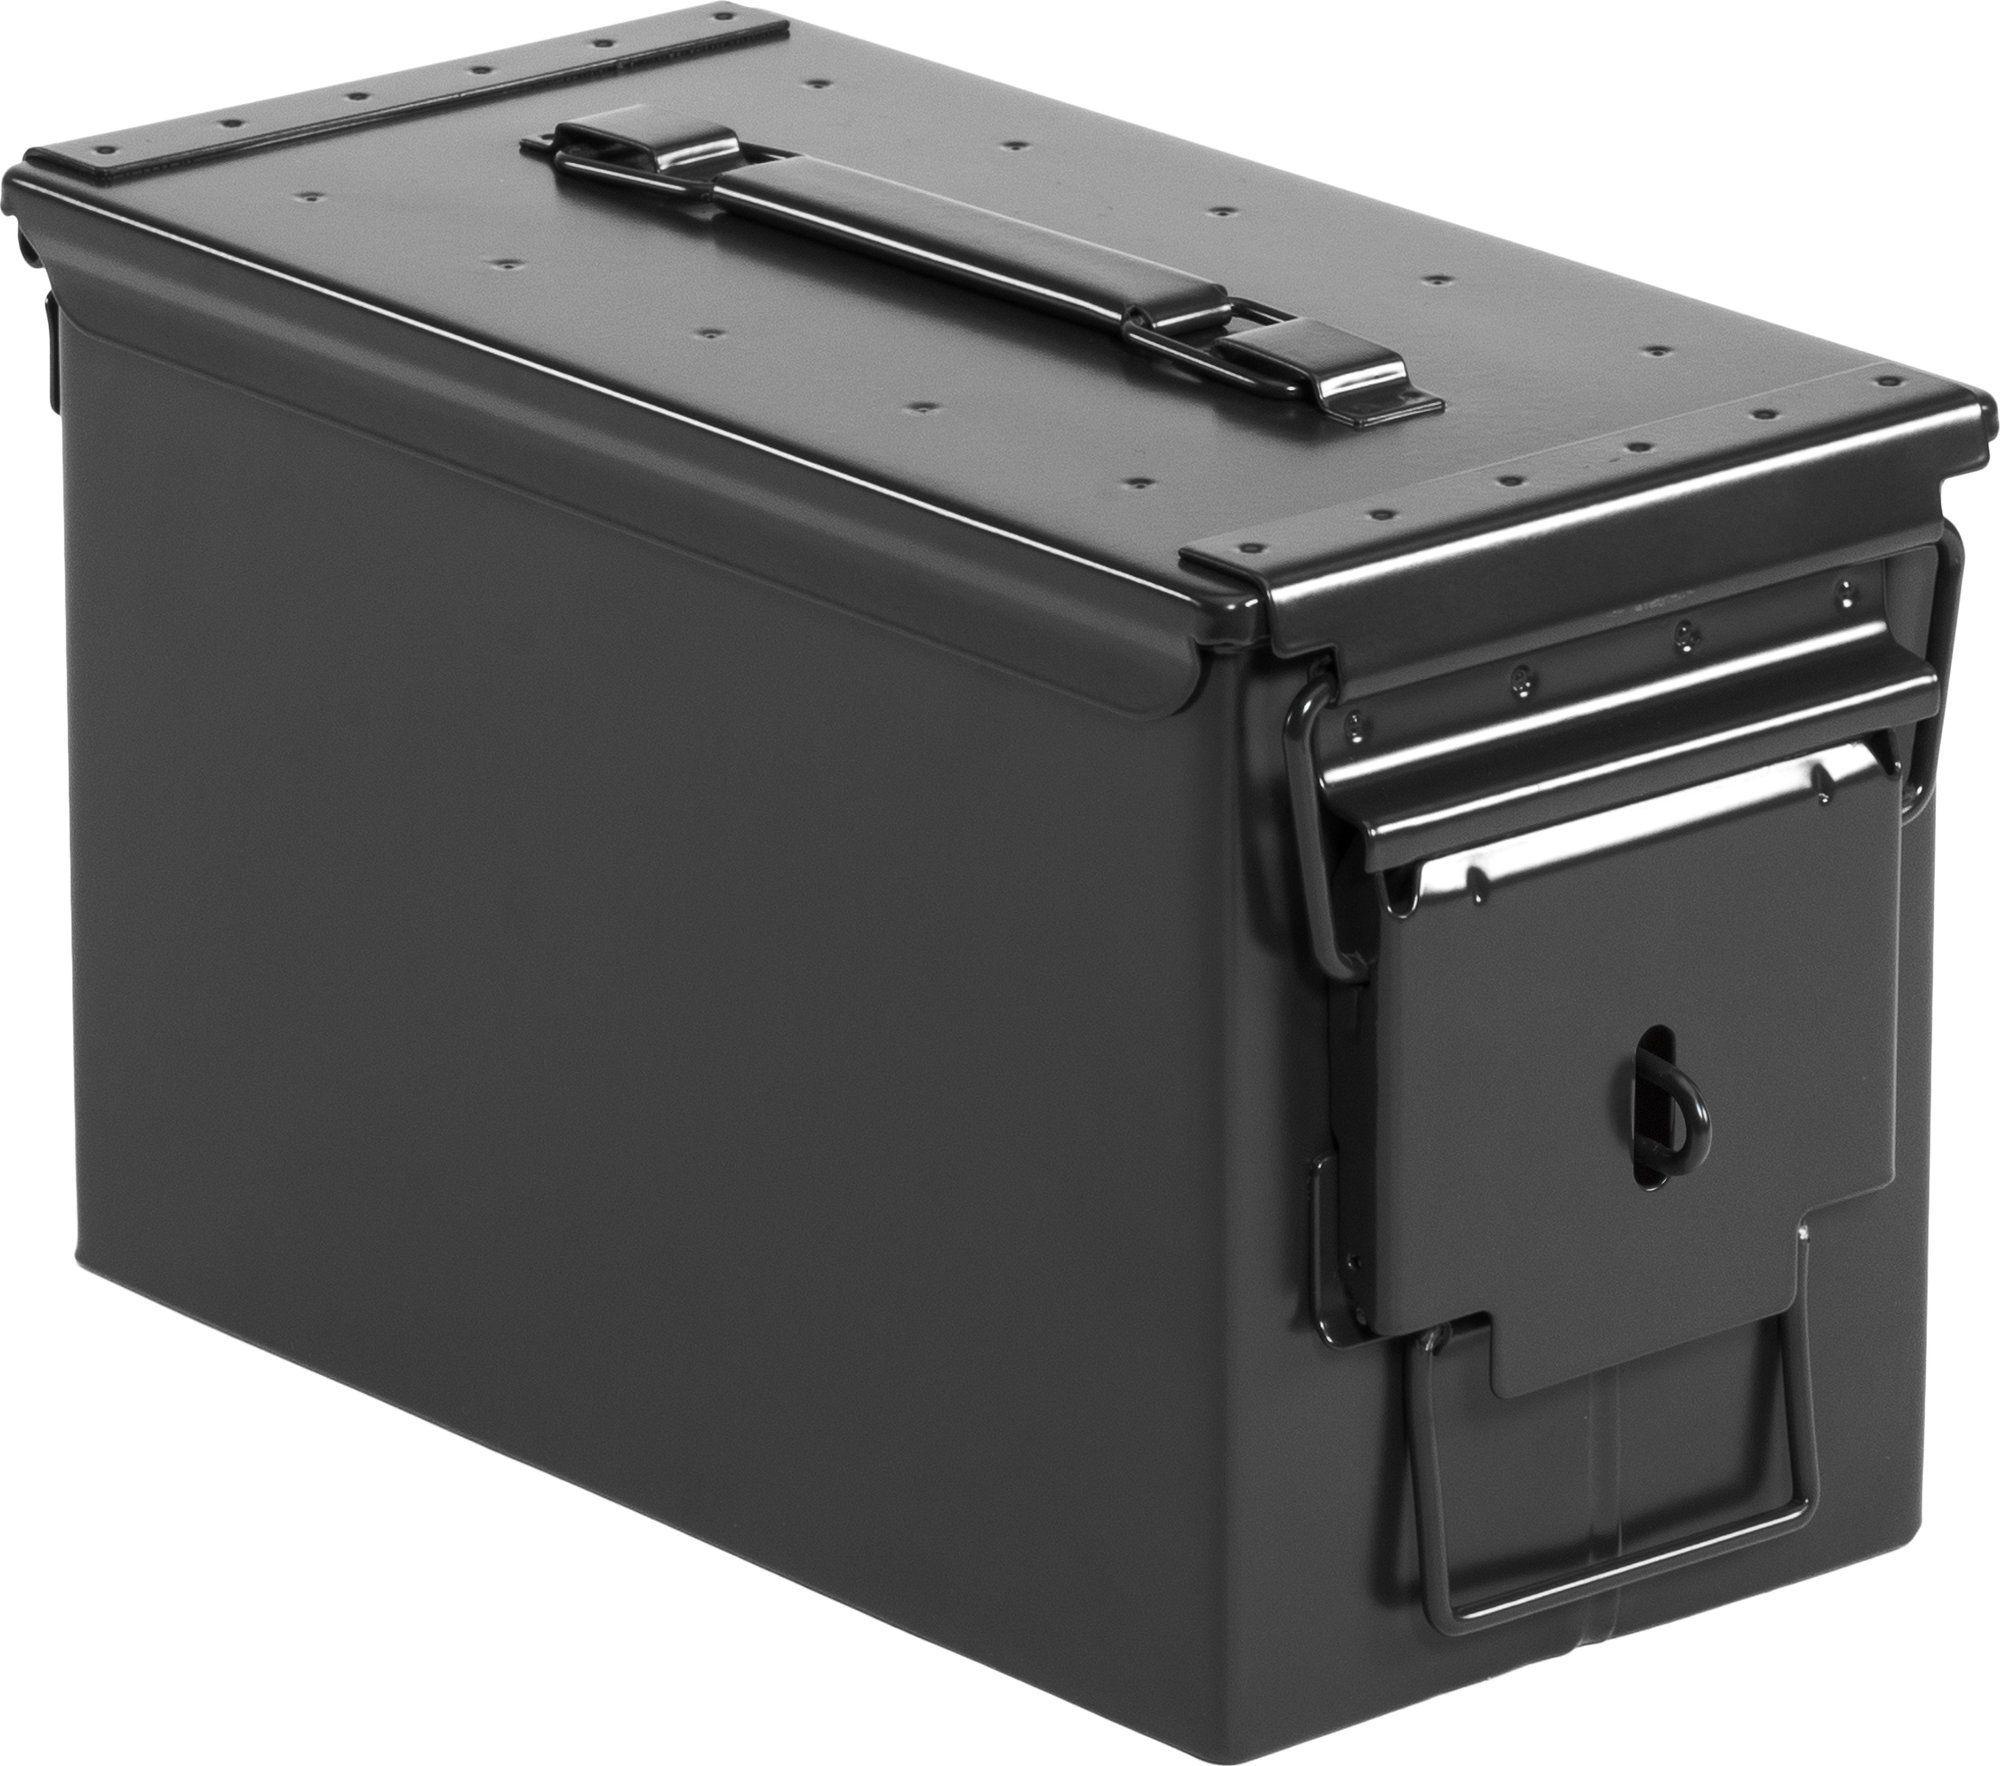 Quadratec 50 Caliber Black Locking Ammo Storage Can